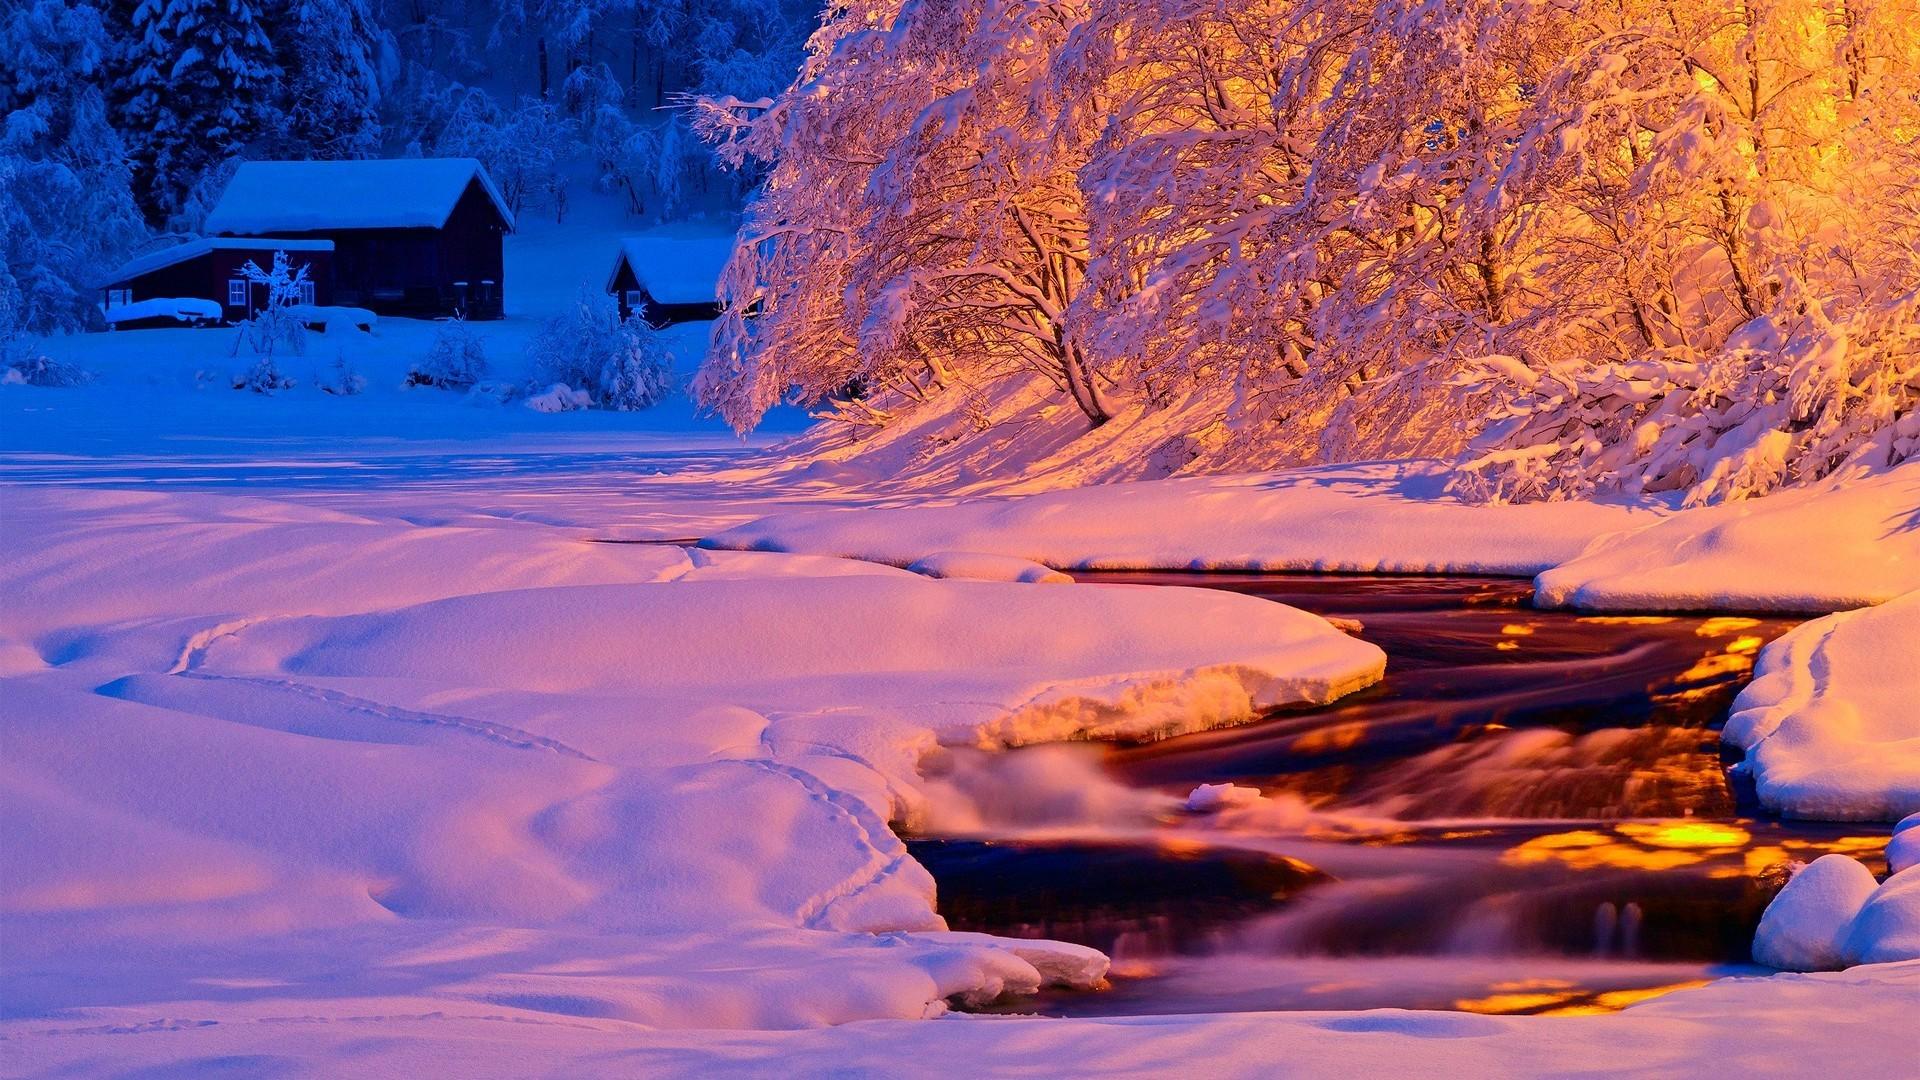 Photos of winter landscapes - desktop wallpapers